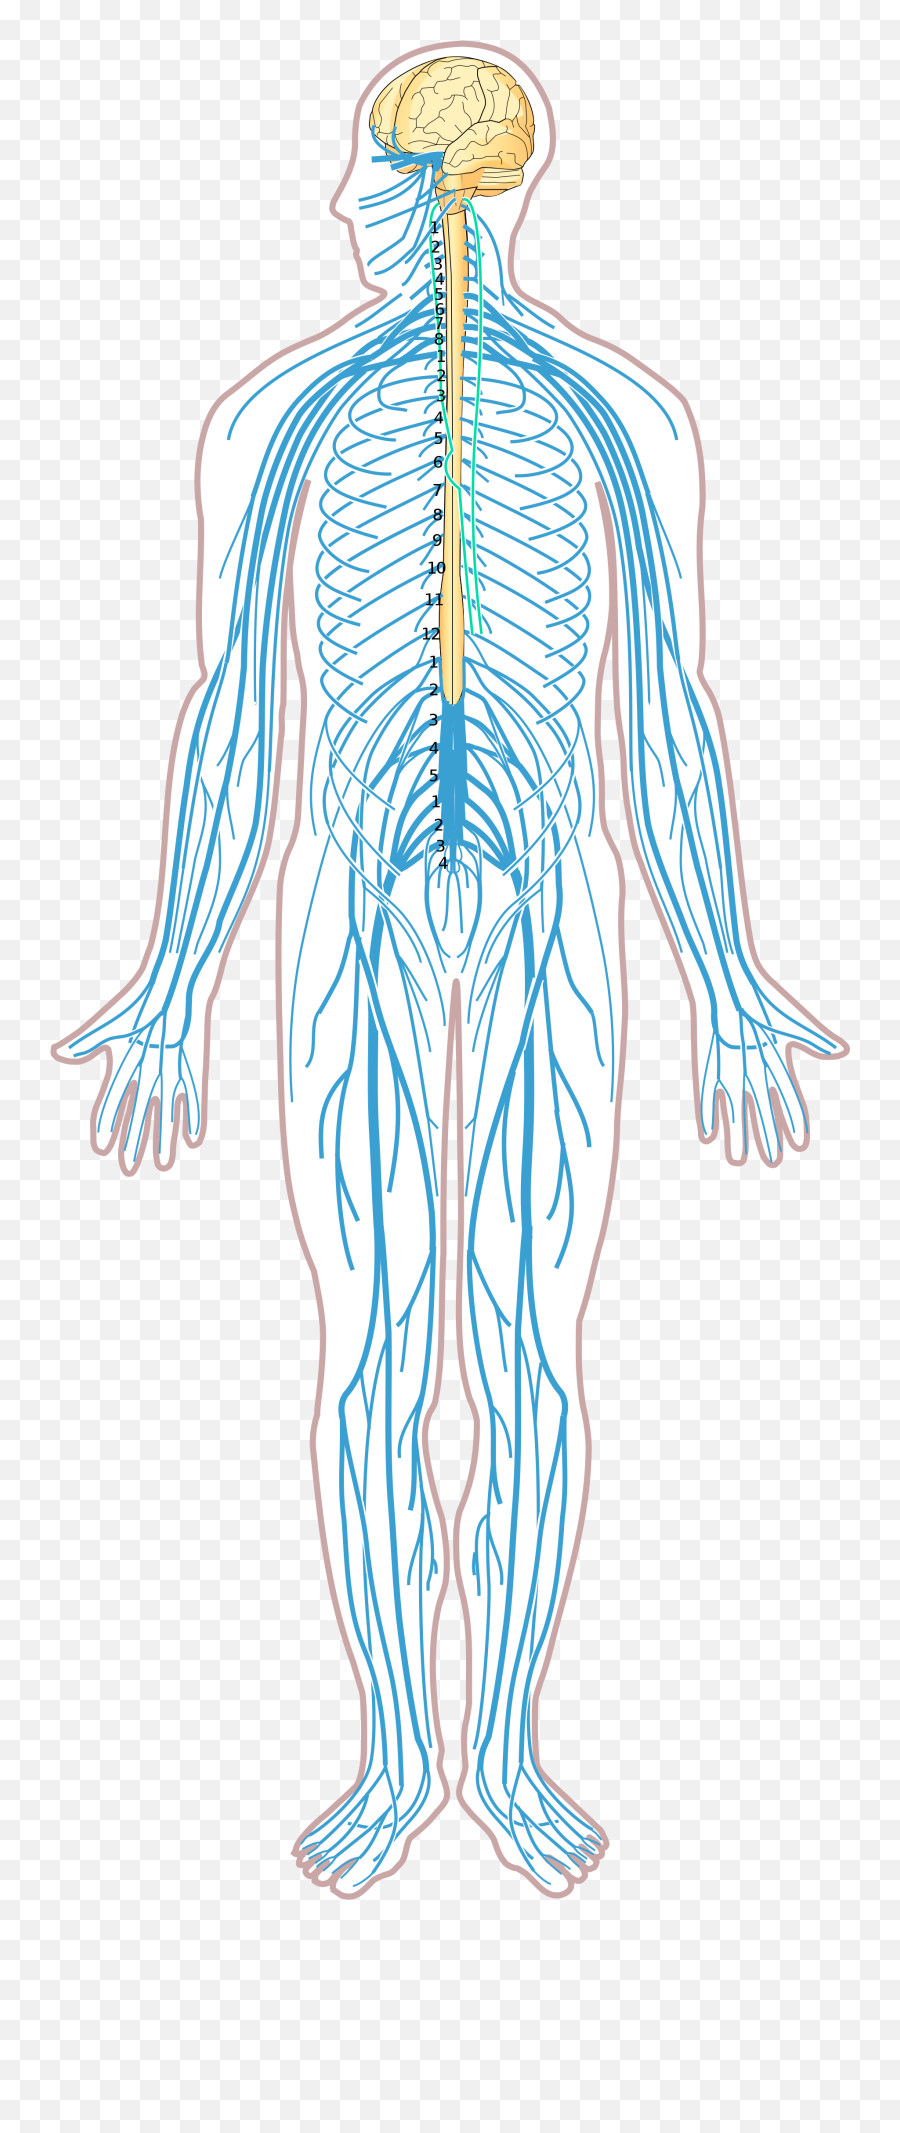 Nervous System Diagram Unlabeled - Parts Of Nervous System Without Label Png,Nervous System Png